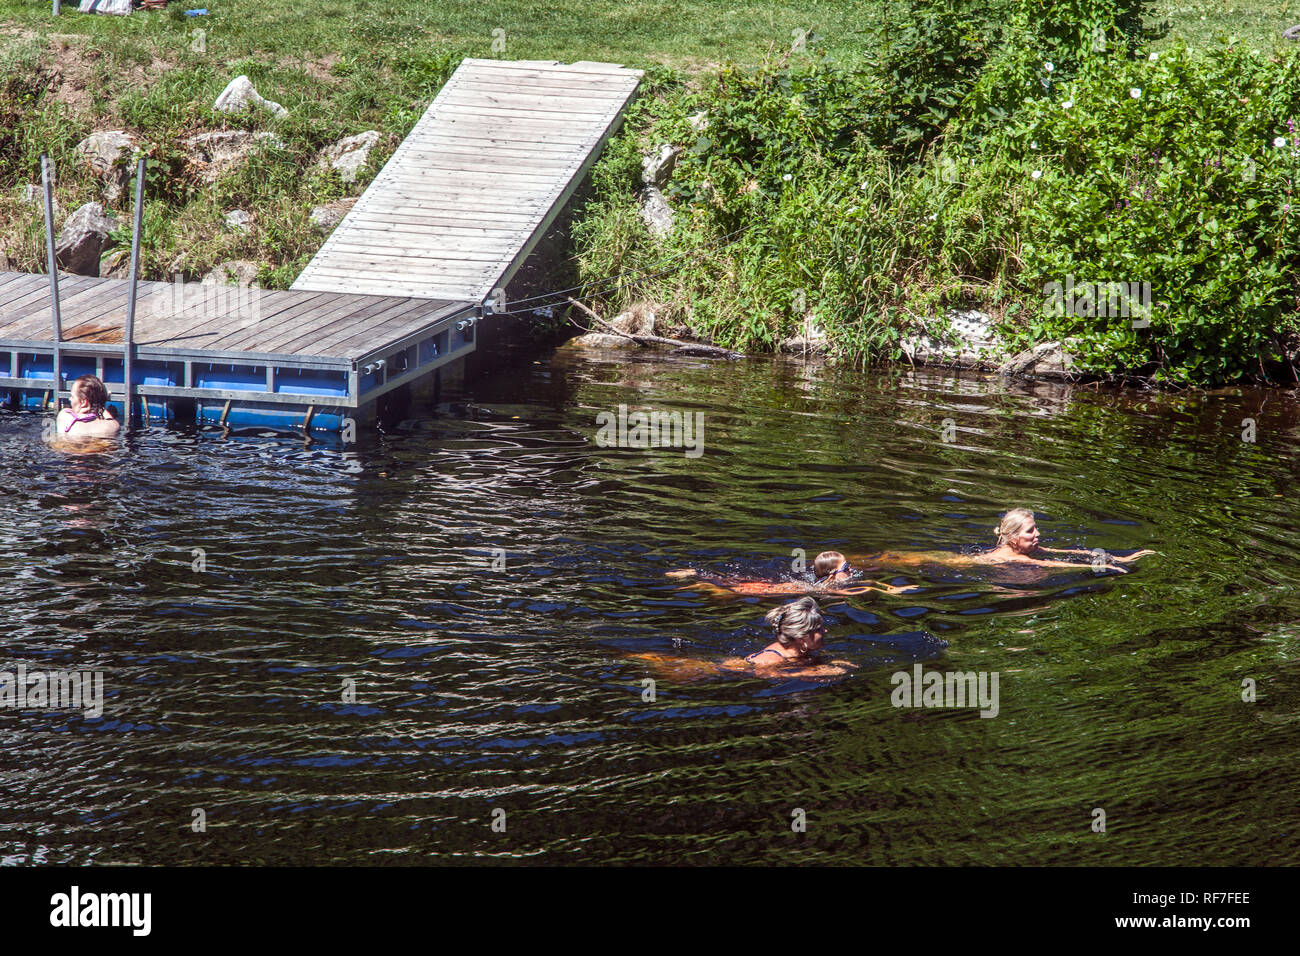 Four women swim in the Otava River, near a wooden pier, South Bohemia, Czech Republic Stock Photo